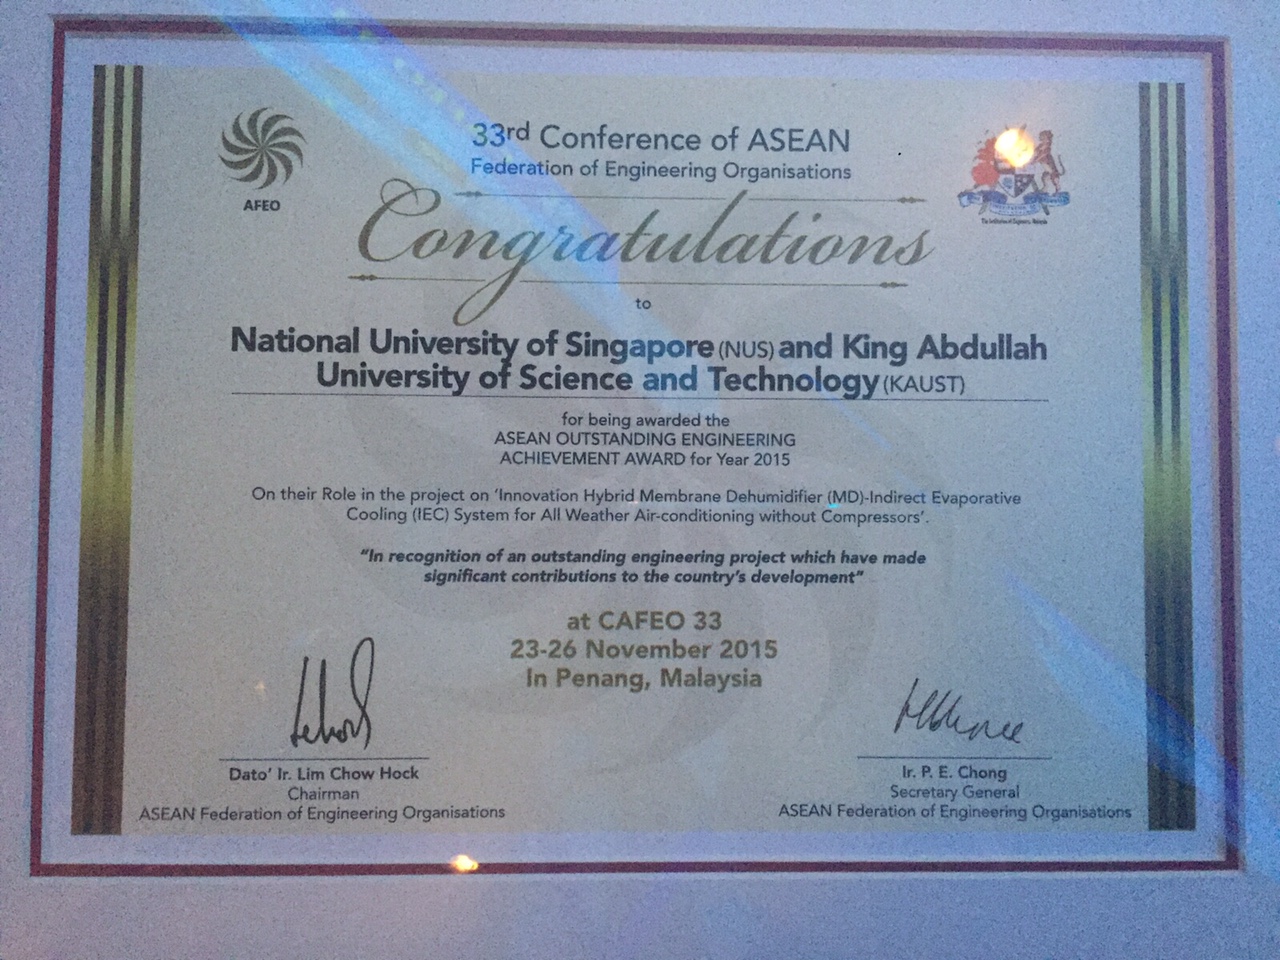 ASEAN Outstanding Engineering Achievement Award 2015